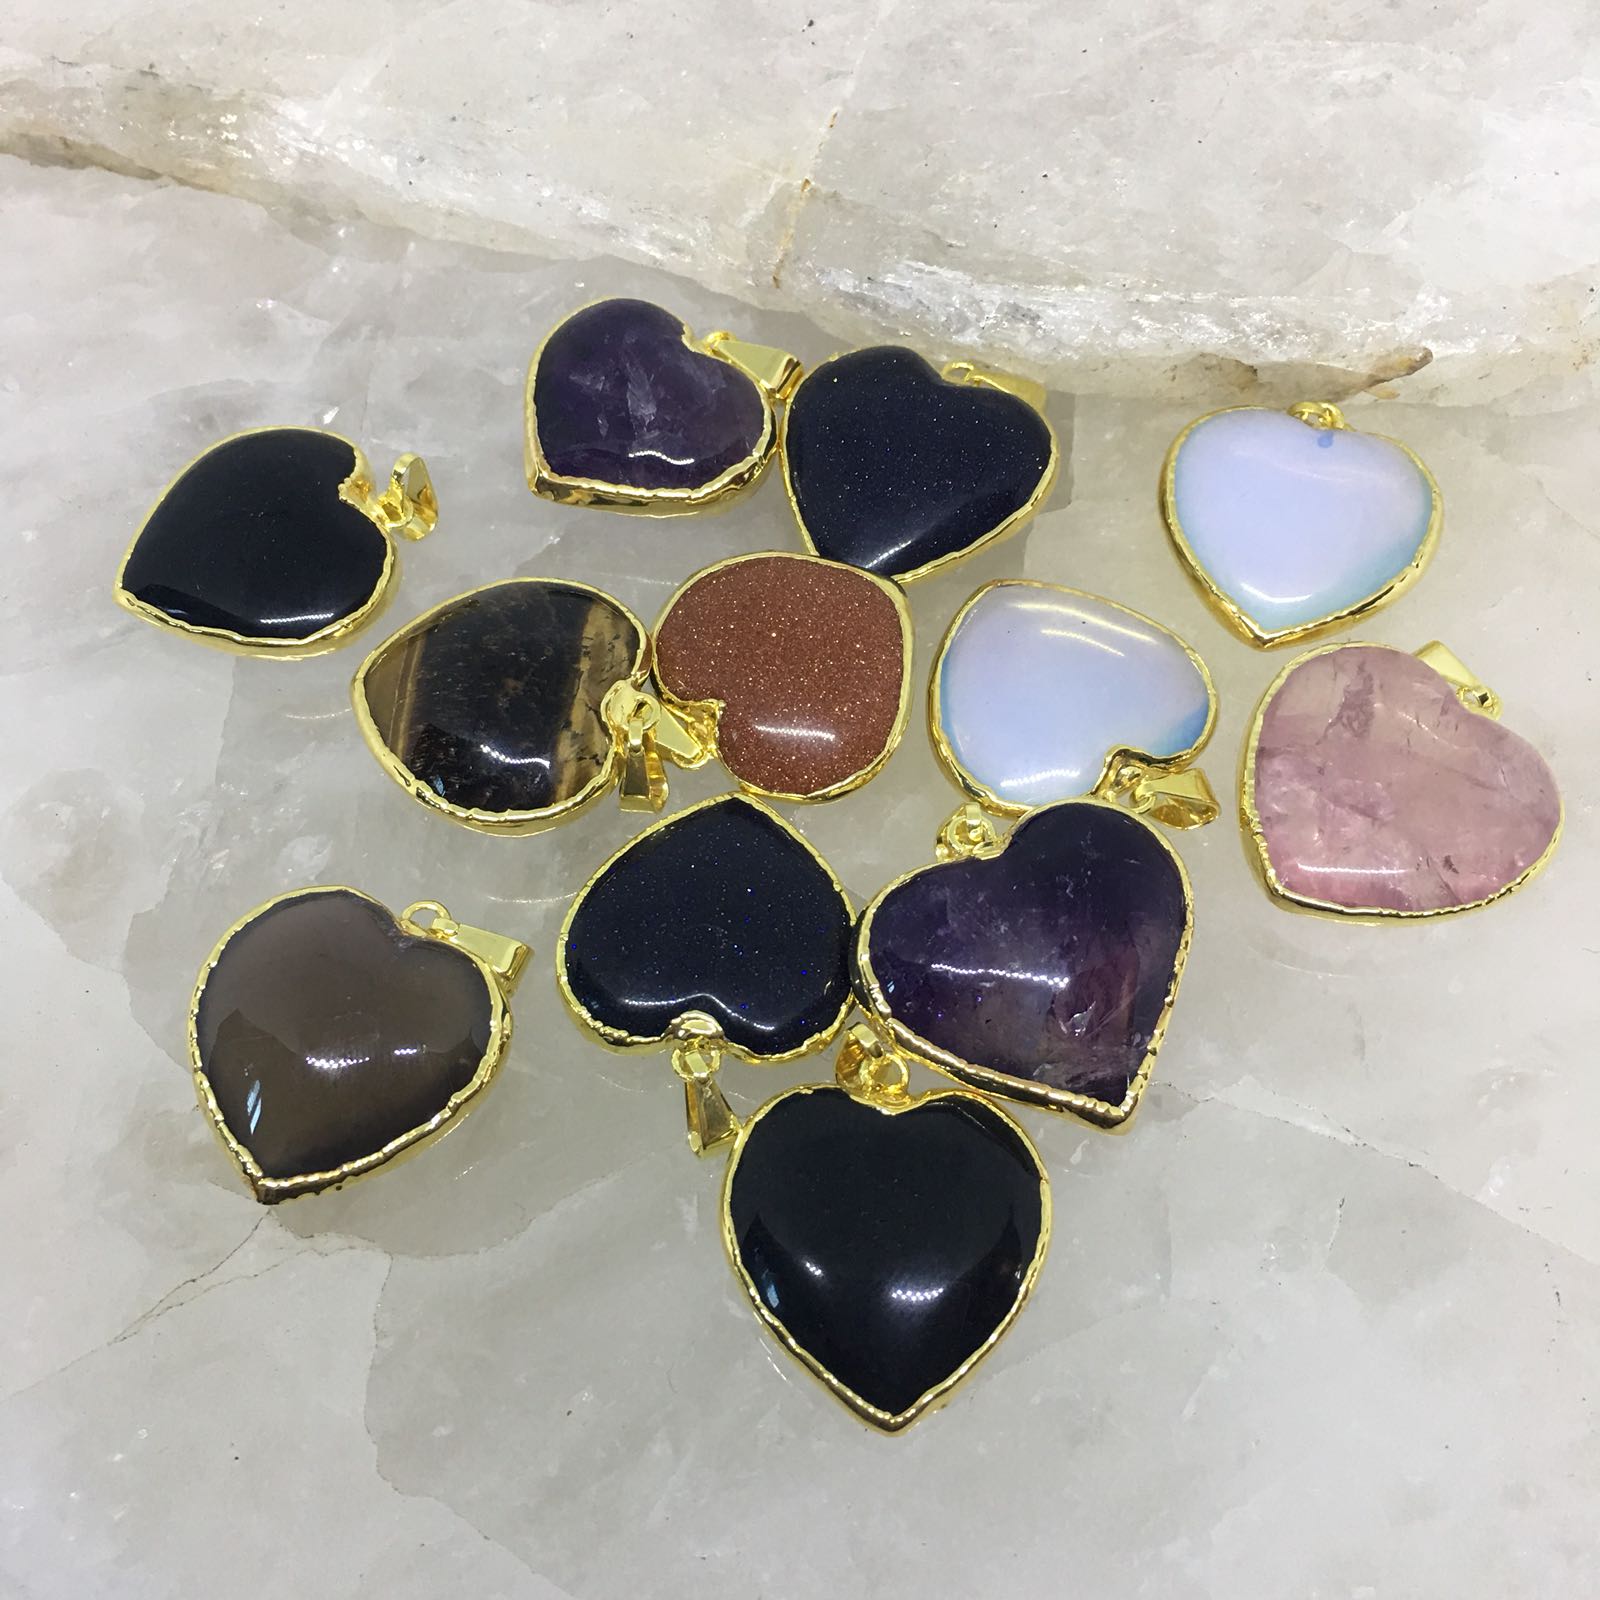 Stones from Uruguay - Gold Plated Quartz Heart Cabochon Pendants, 25mm